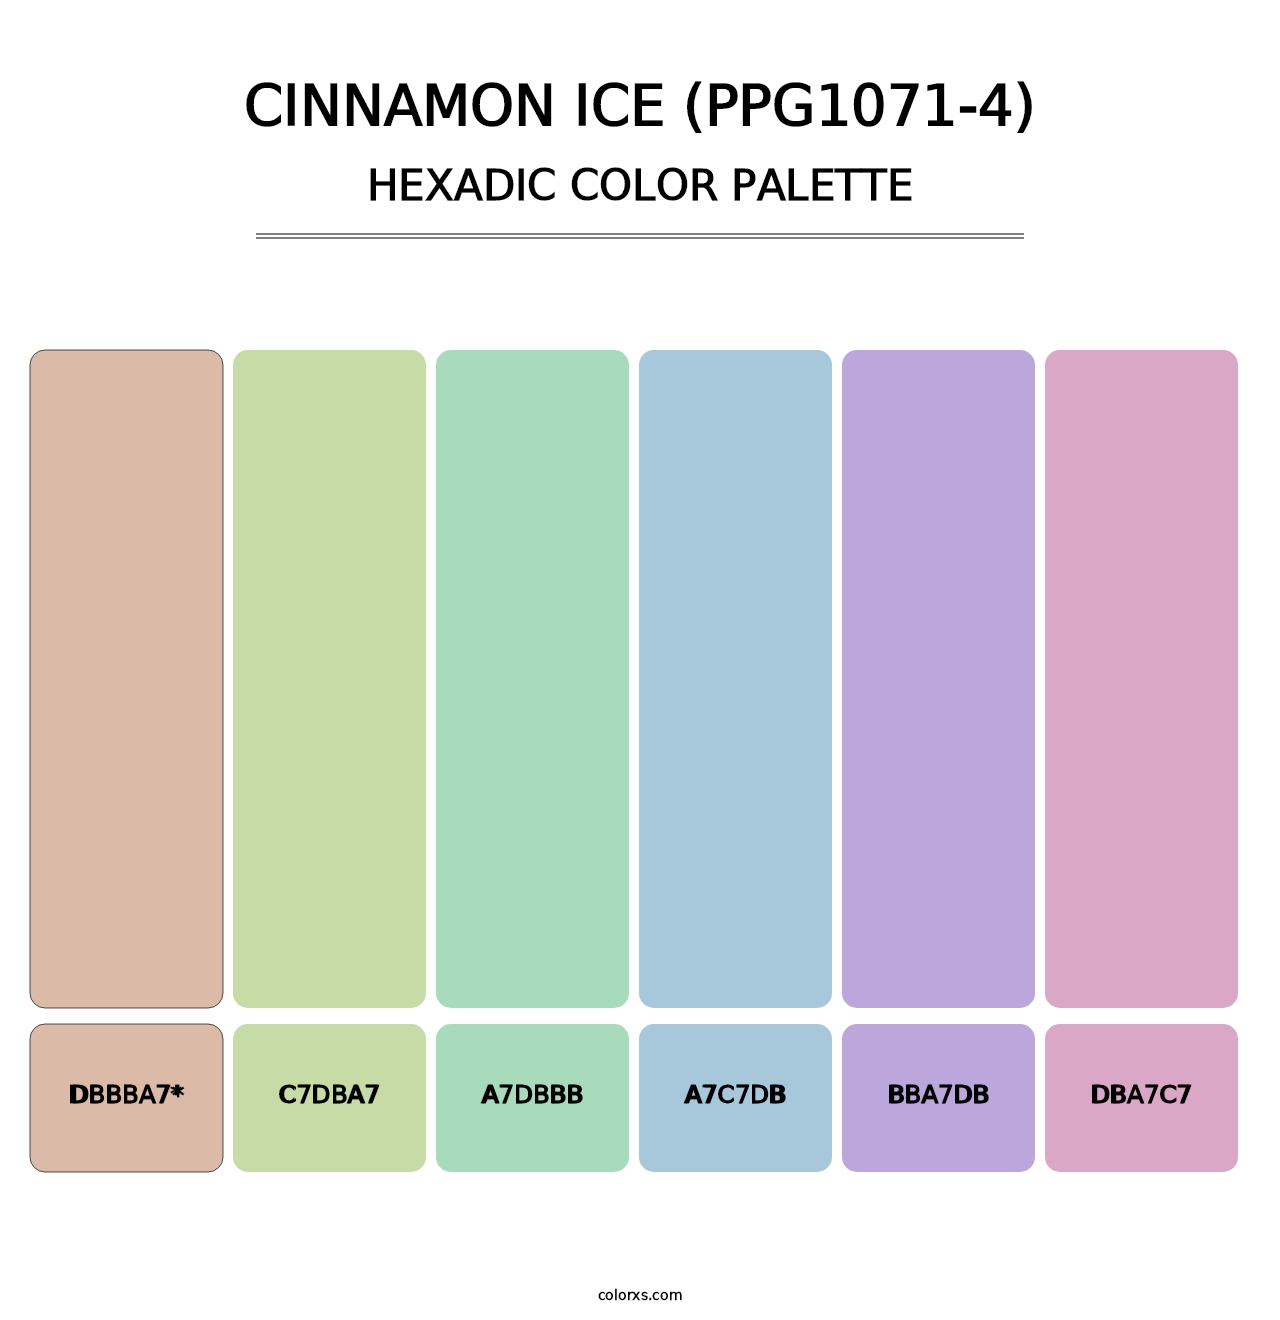 Cinnamon Ice (PPG1071-4) - Hexadic Color Palette